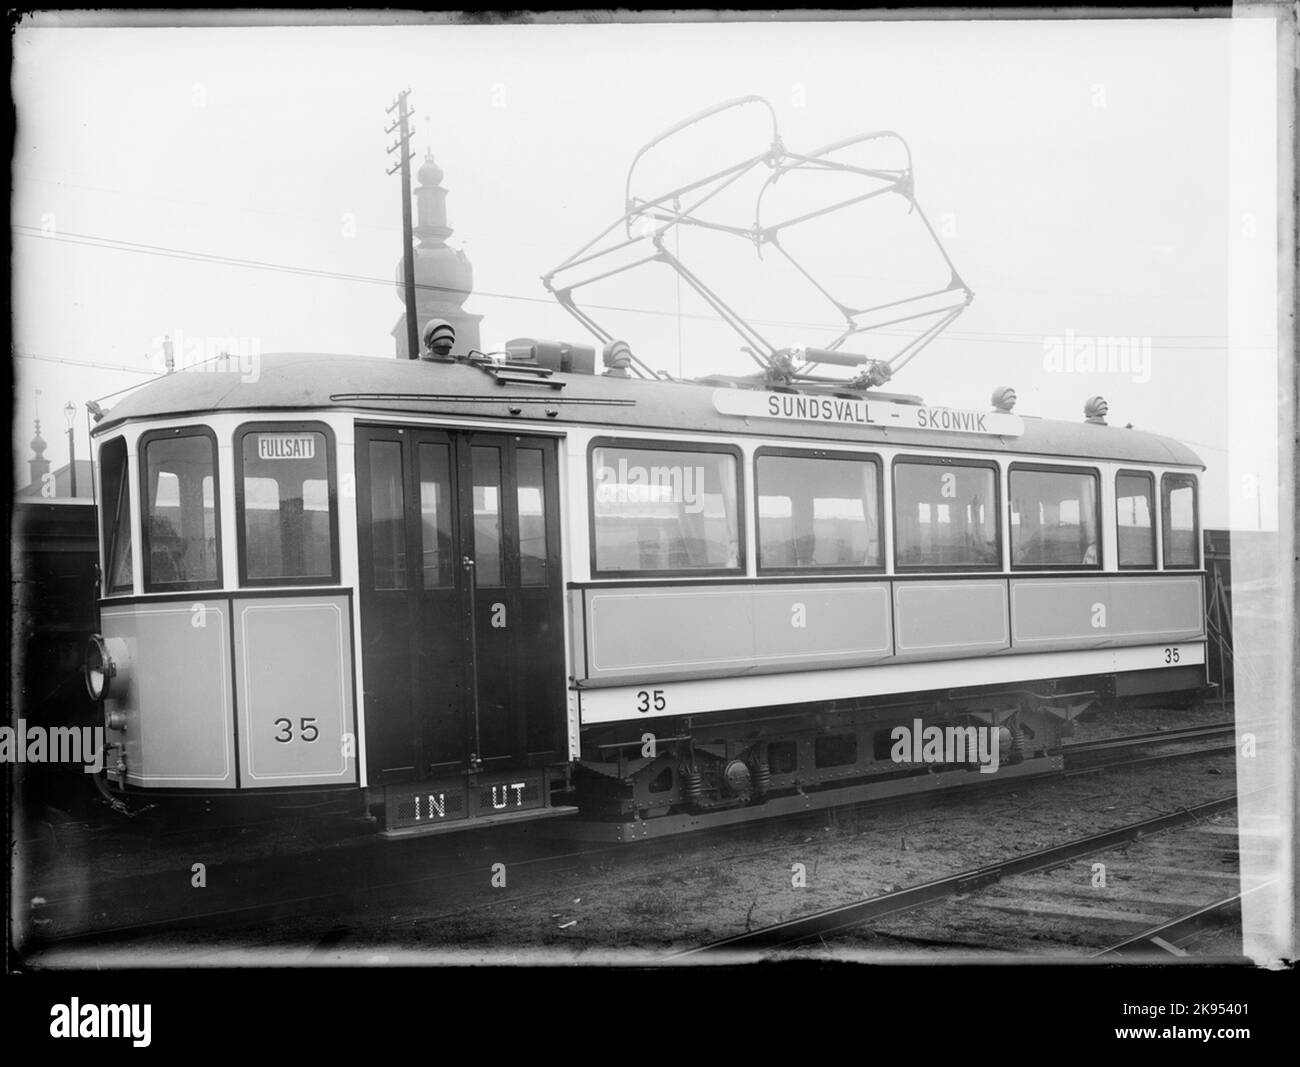 Sundsvalls Spårvägs AB Tram 35 qui exploitait la ligne Sundsvall - Skönvik. Livraison toit photo à Västerås avant transport du fabricant ASEA 1925. Banque D'Images